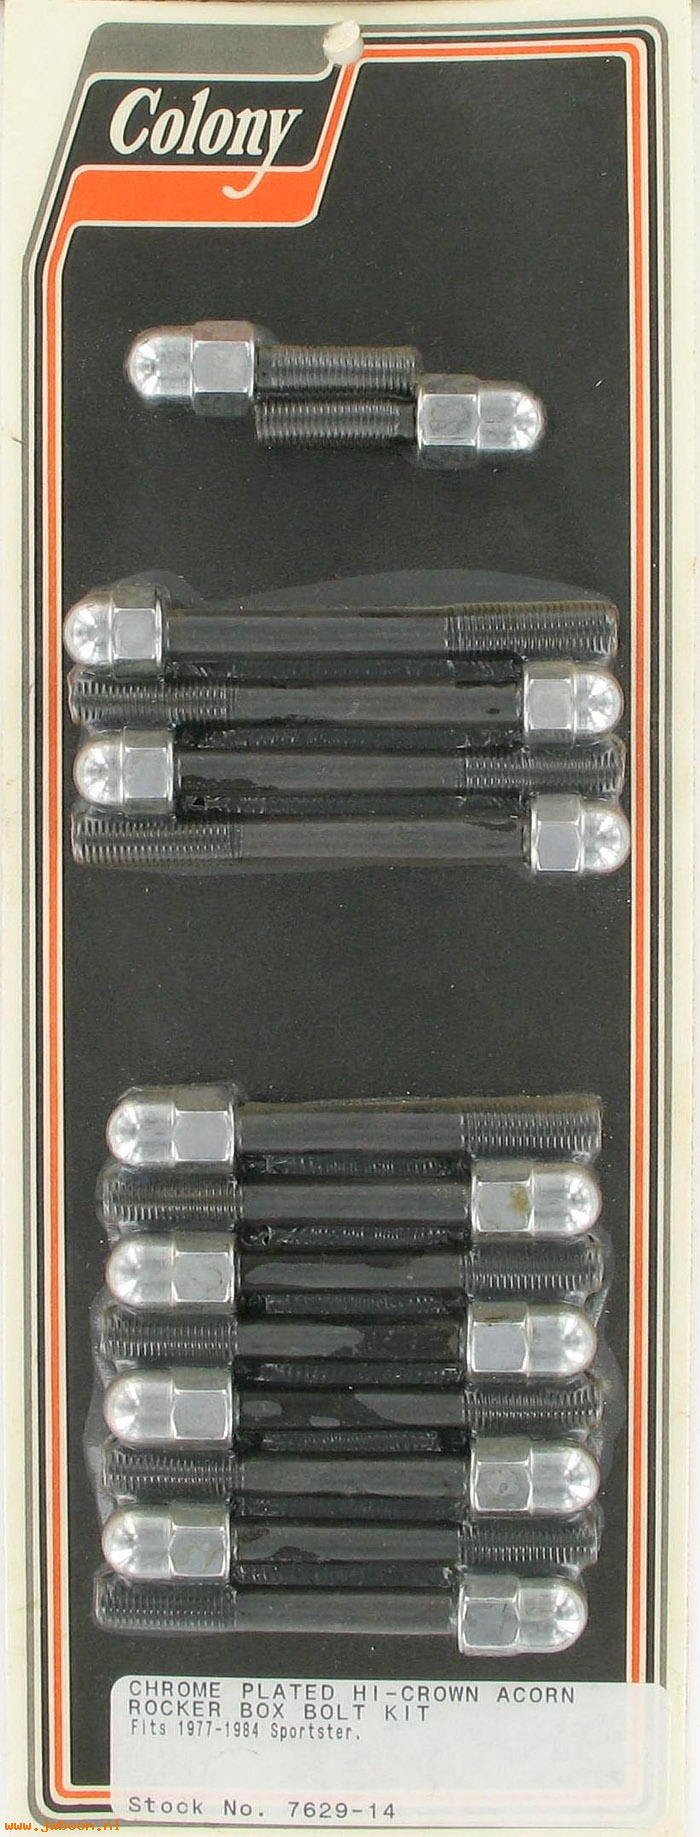 C 7629-14 (): Rocker box bolt kit - Ironhead XL's '77-'85, in stock, Colony